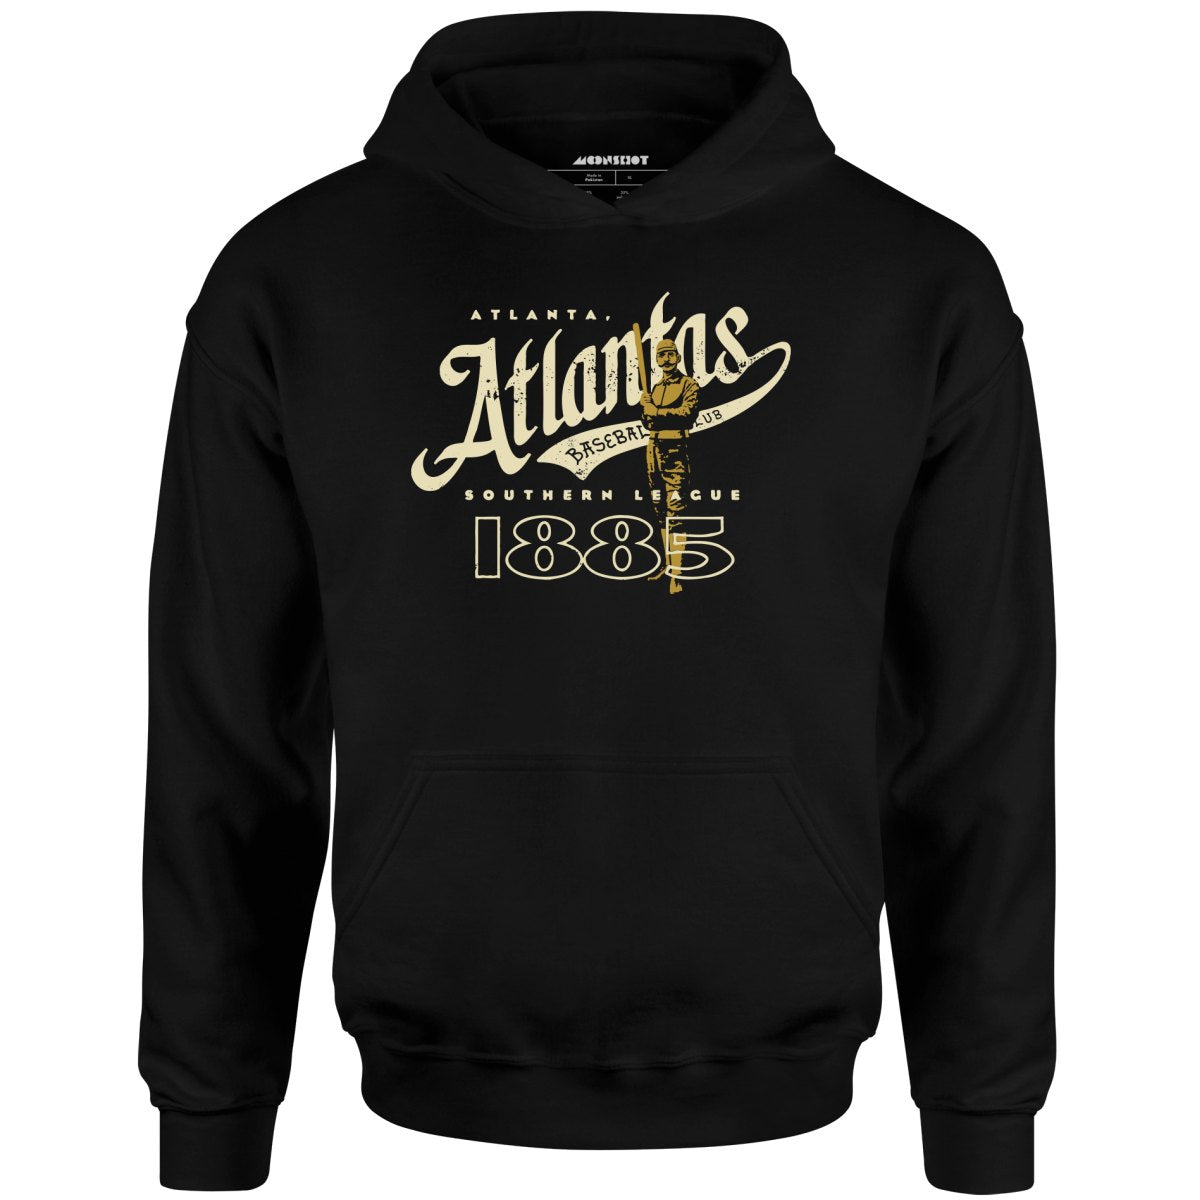 Atlanta Atlantas - Georgia - Vintage Defunct Baseball Teams - Unisex Hoodie